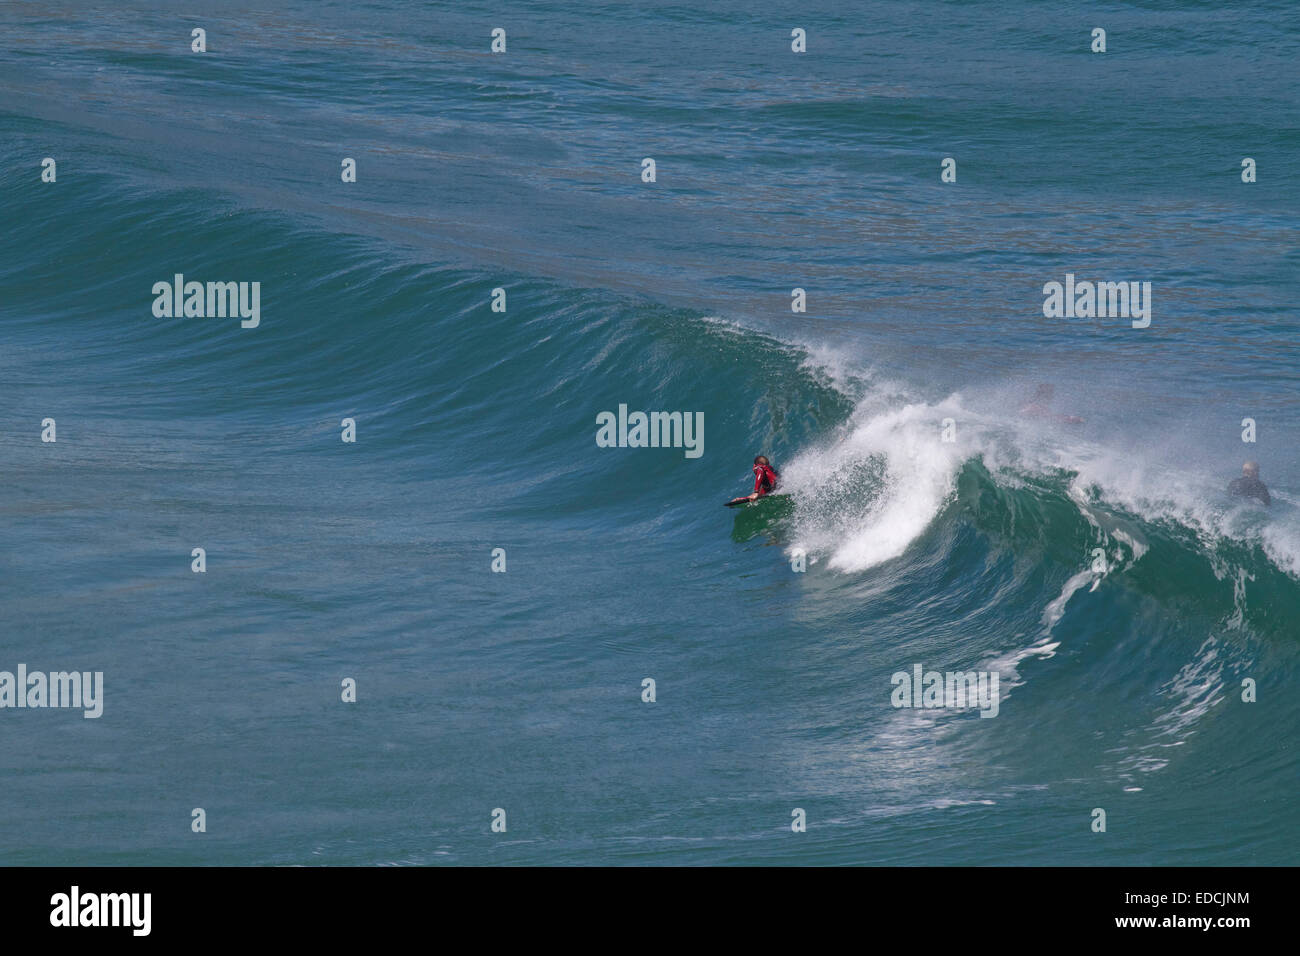 Surfer. Ozean. Wellen. Bettysbaai, Bettys Bay. Western Cape. Südafrika. Tourismus. Kleinmond. Meer. Urlaubsziel. Surfen Stockfoto